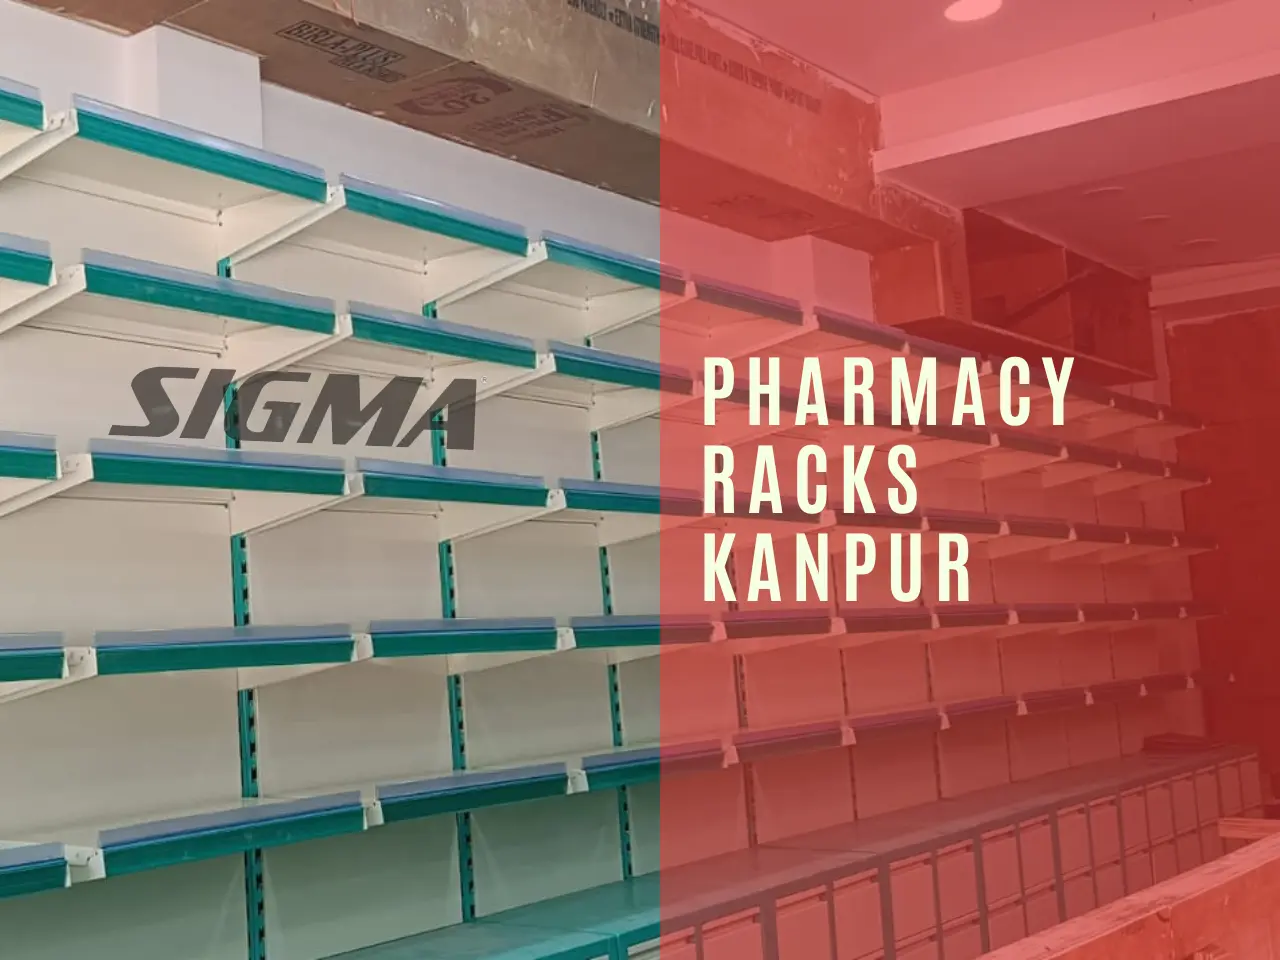 Pharmacy Racks kanpur.webp